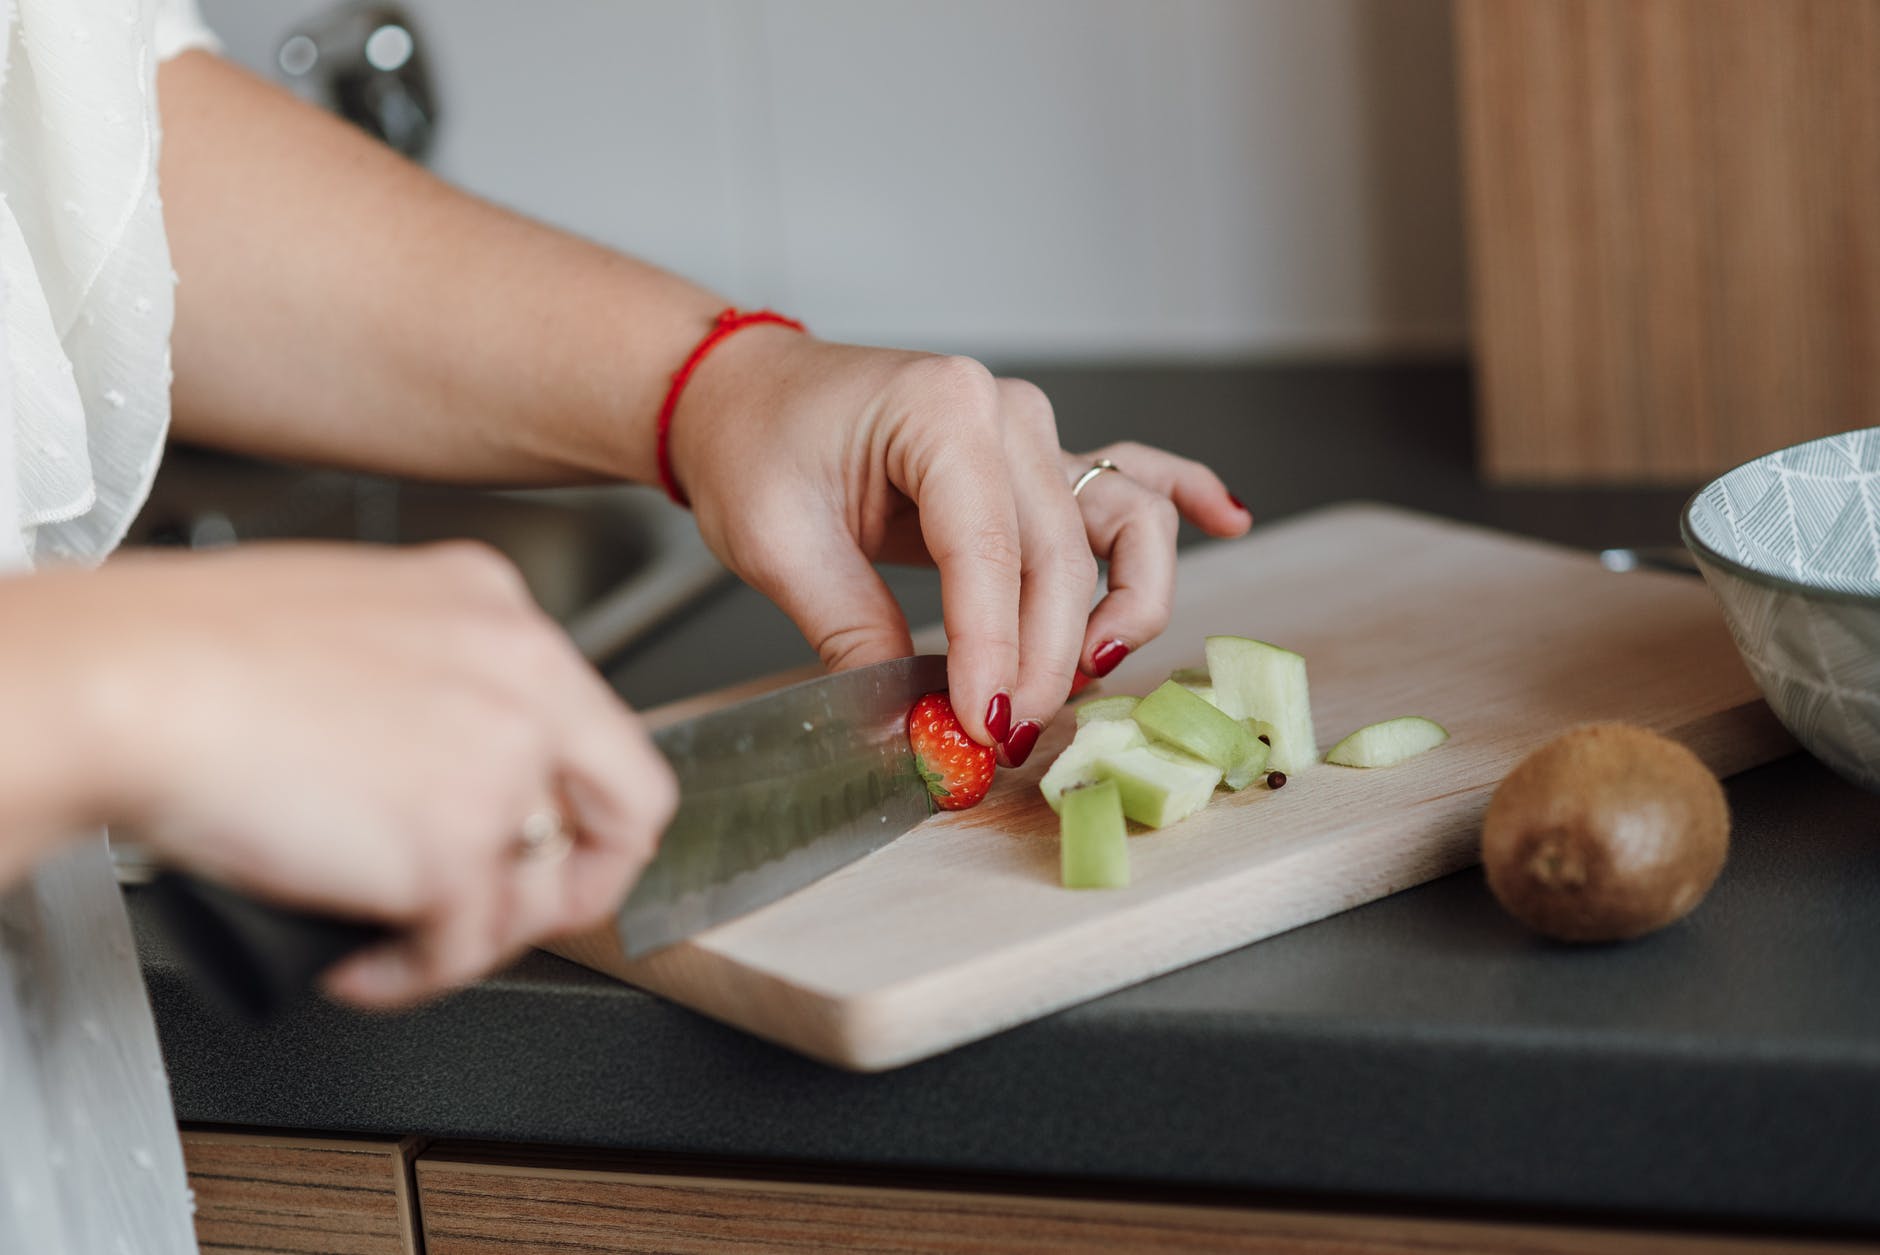 crop woman cutting strawberry near sliced apple in kitchen